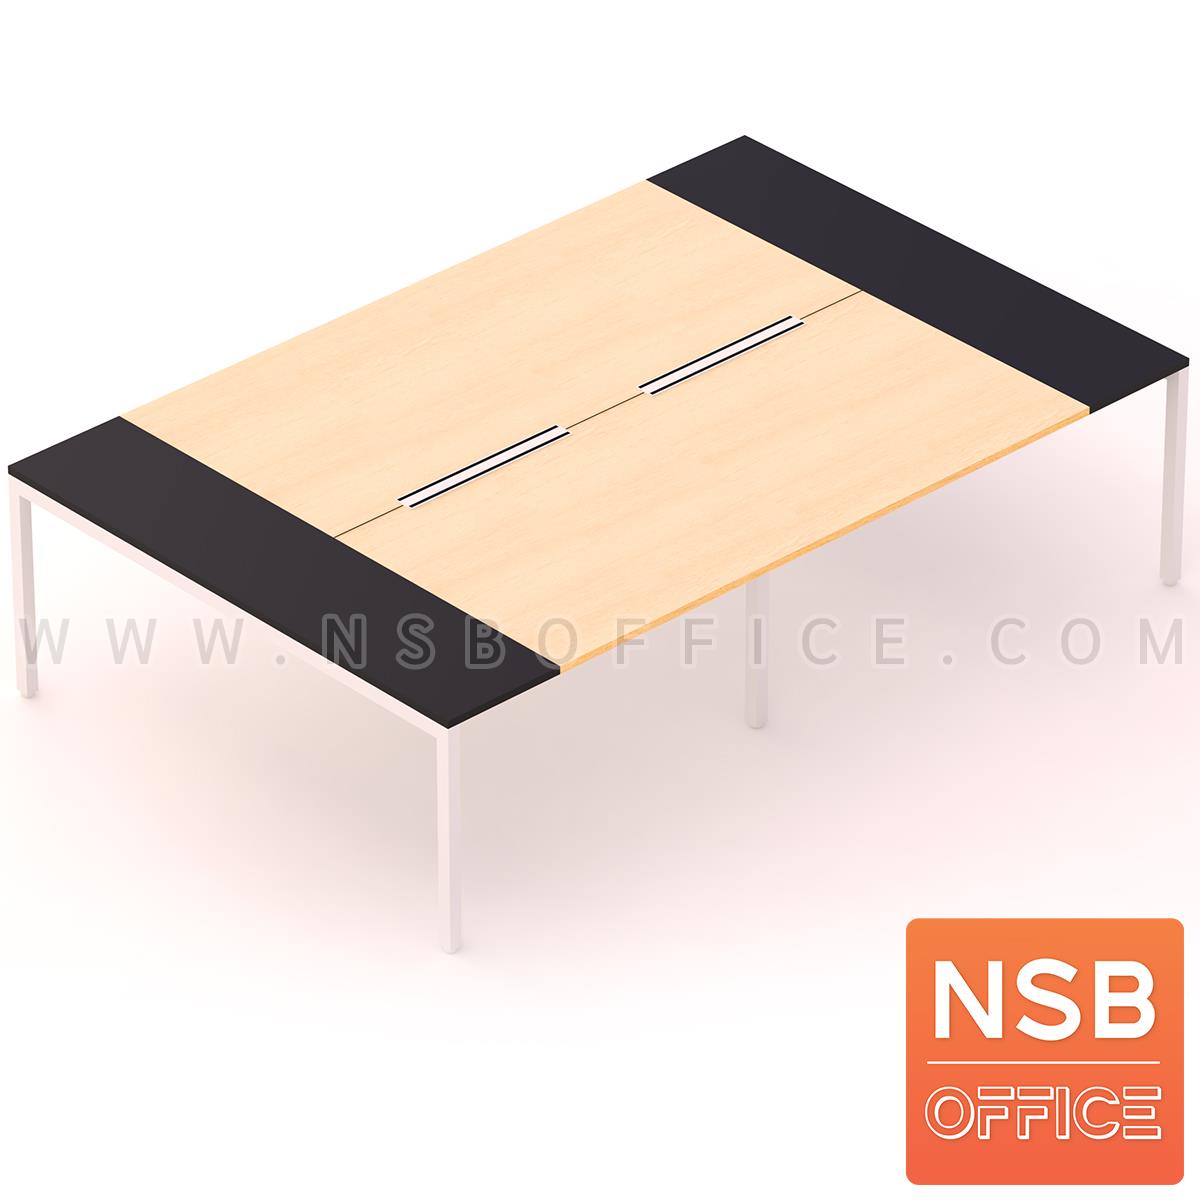 A05A177:โต๊ะประชุมทรงสี่เหลี่ยม 180D cm. รุ่น NSB-SQ18  พร้อมรางไฟแบบสองทาง รหัส A24A006